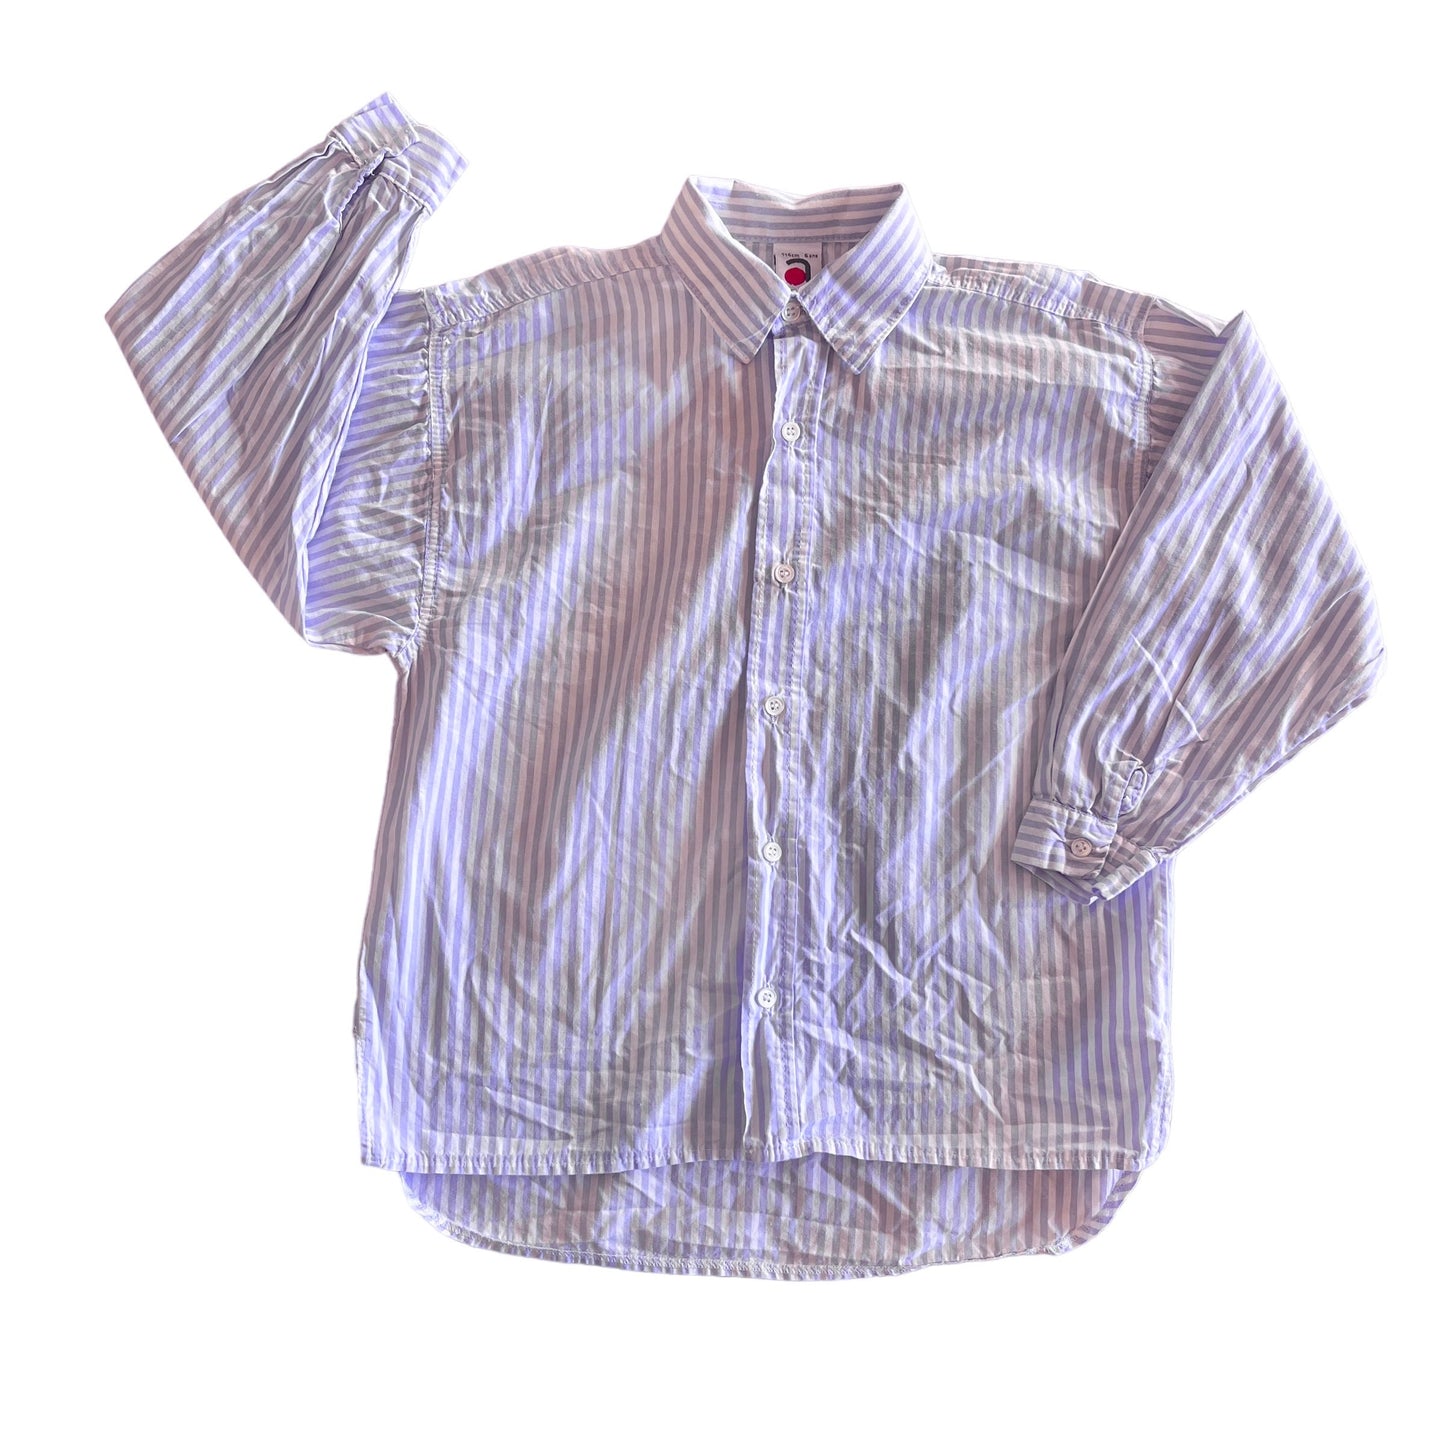 1980's Striped Shirt 5-6Y